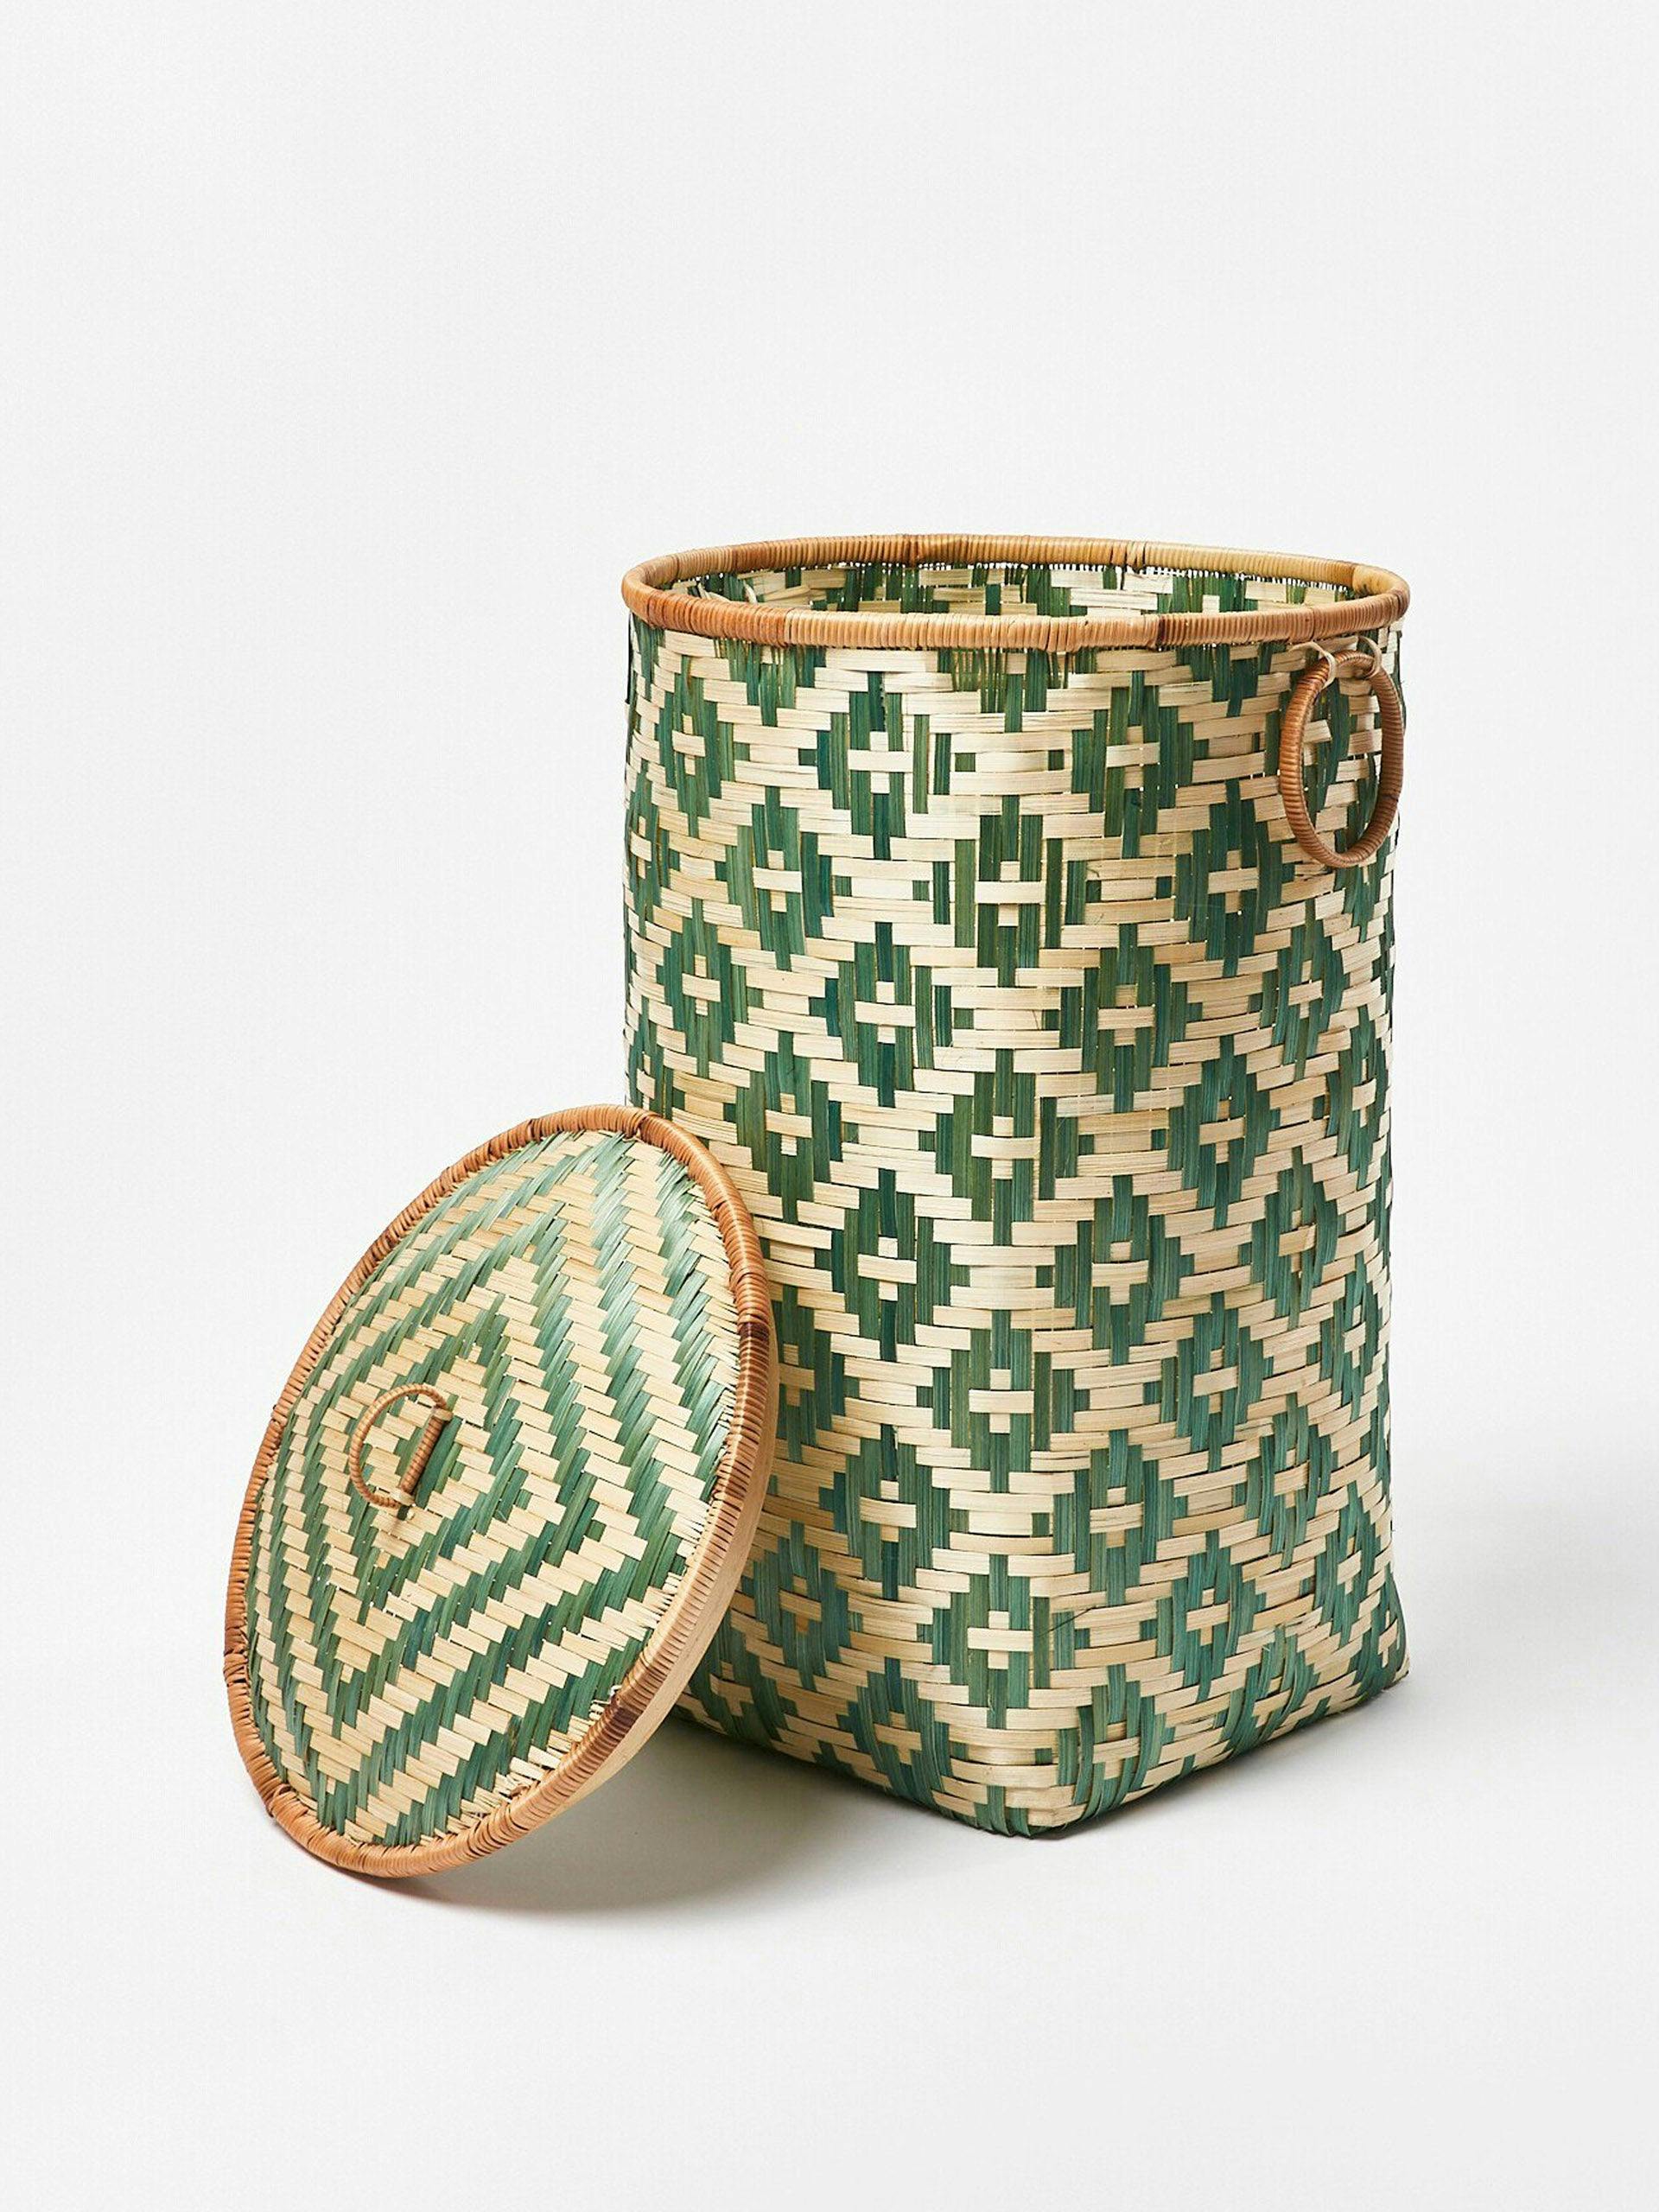 Woven bamboo laundry basket